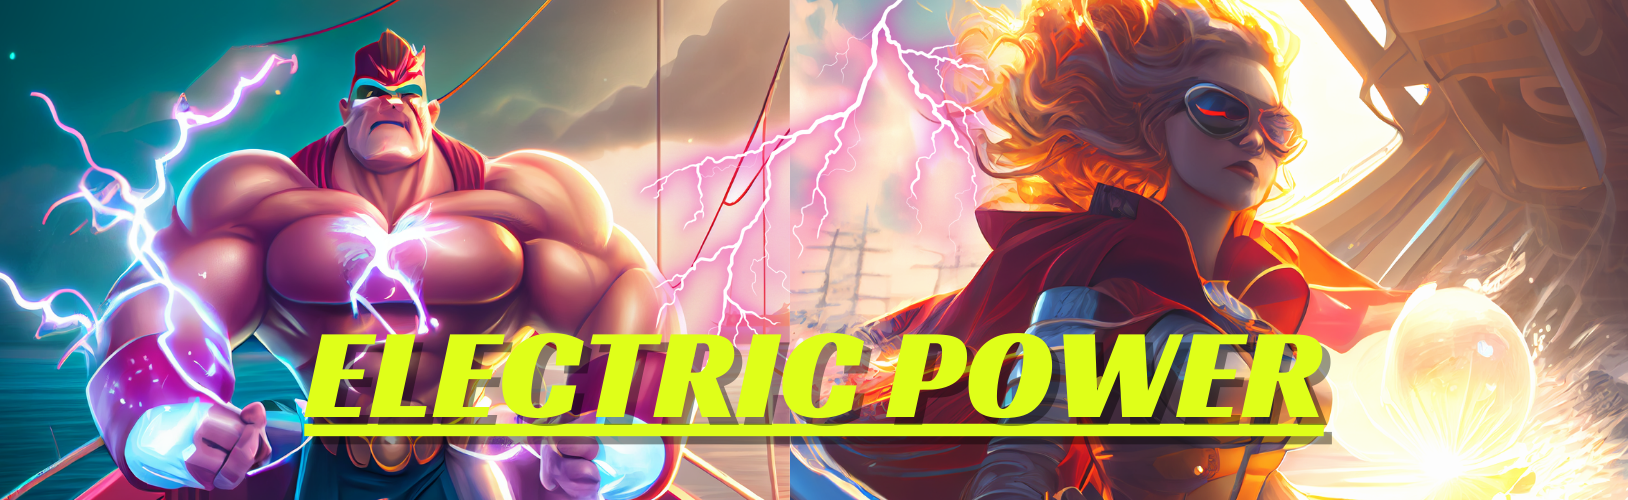 electric-power-hero-template